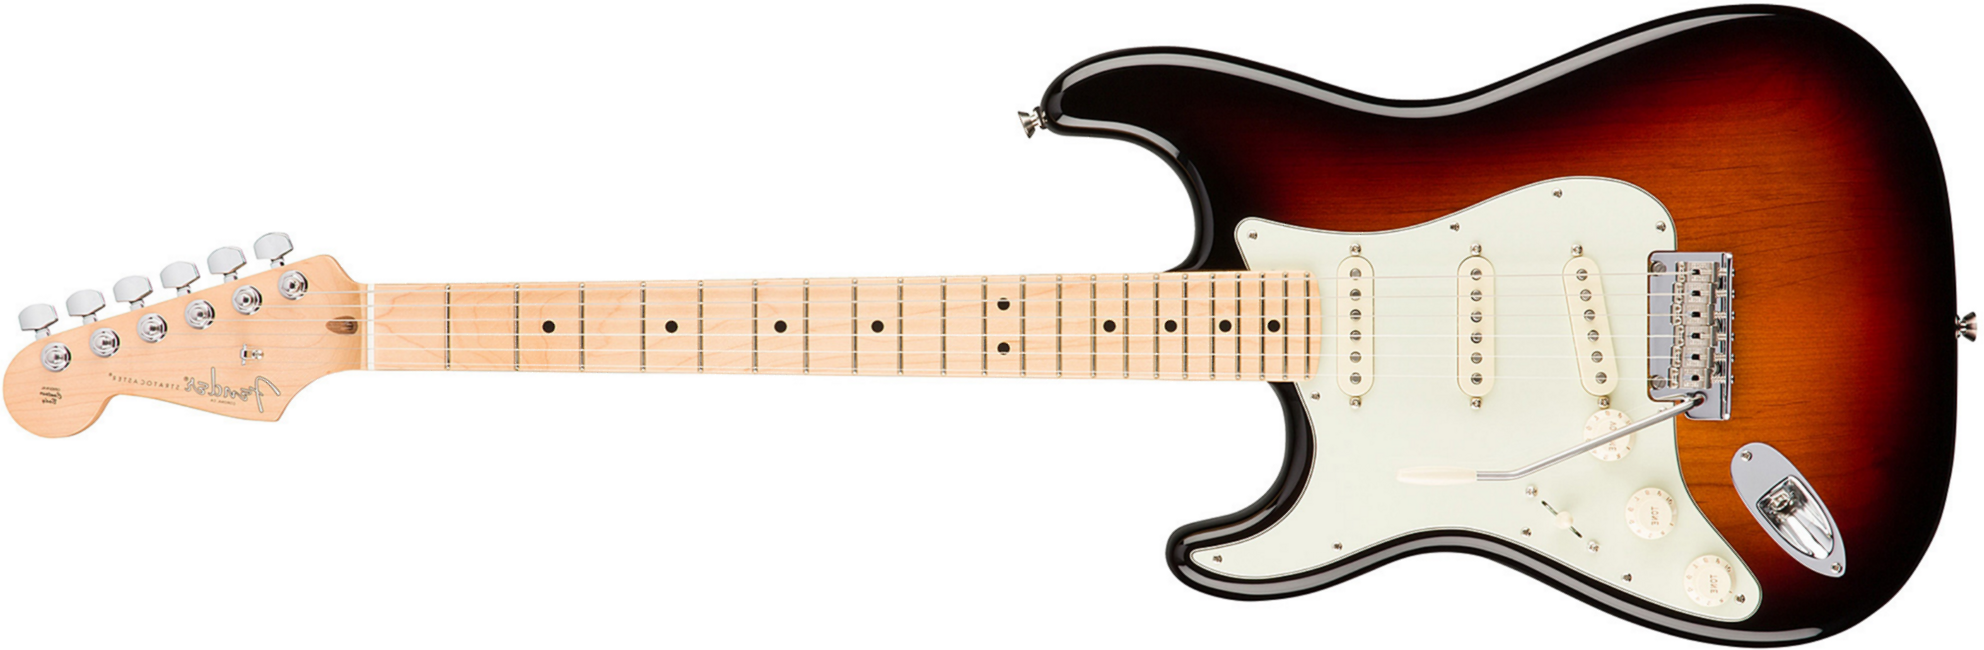 Fender Strat American Professional Lh Usa Gaucher 3s Mn - 3-color Sunburst - Left-handed electric guitar - Main picture